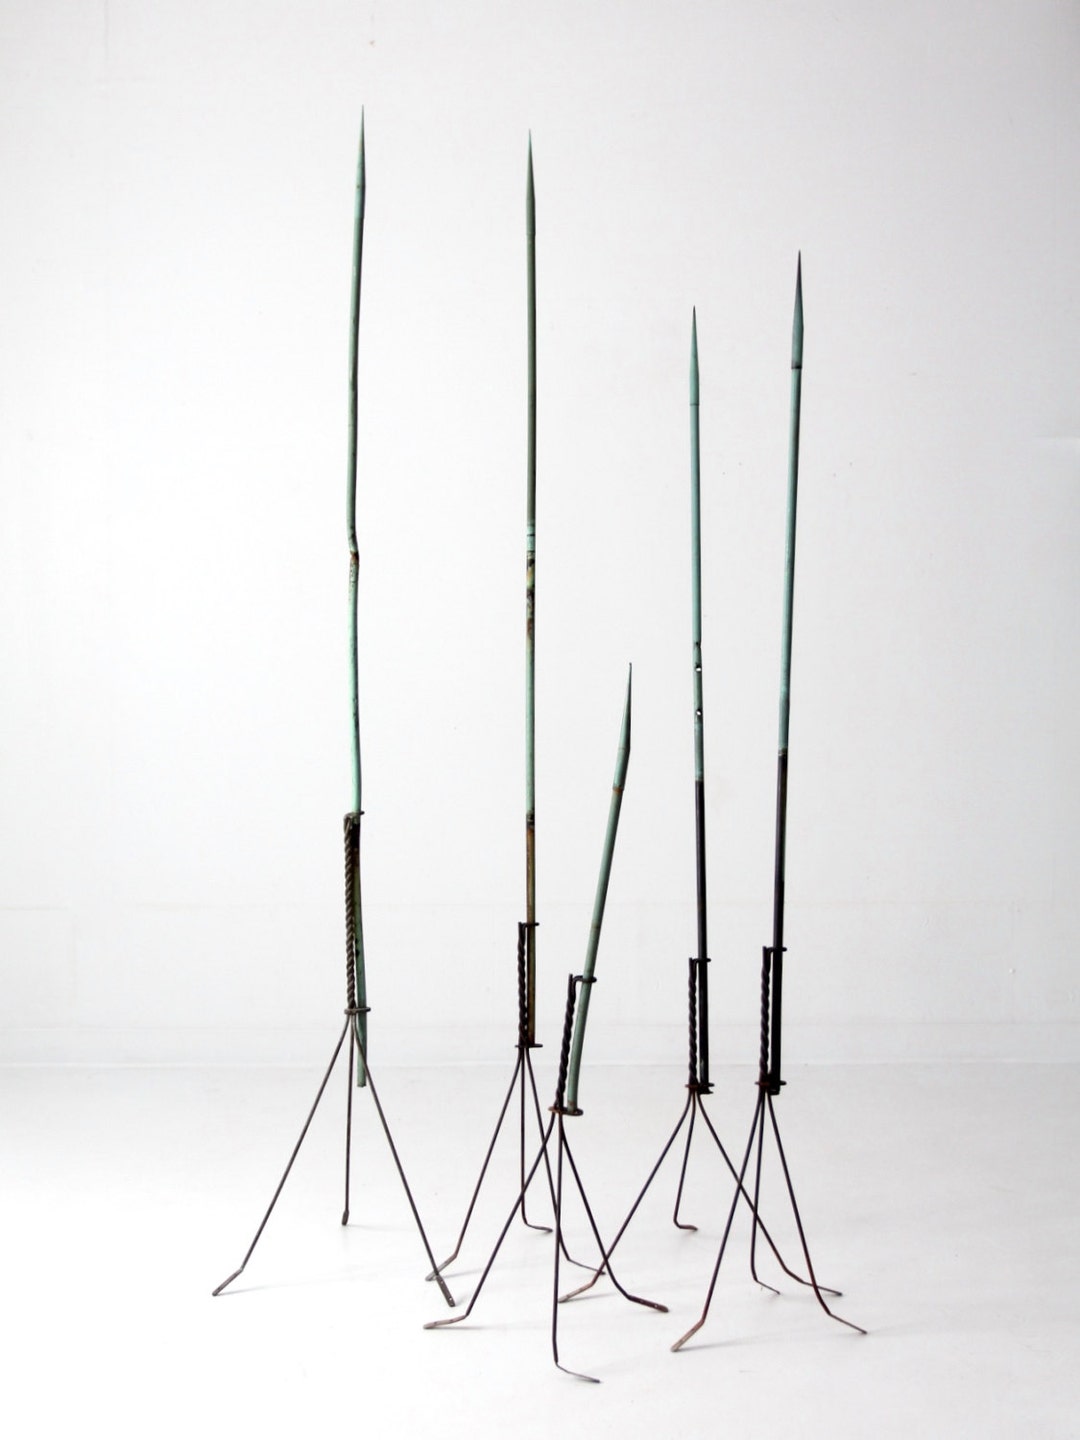 Antique American Lightning Rods, 5 Pc Collection Copper Verdigris Lightning  Rods 